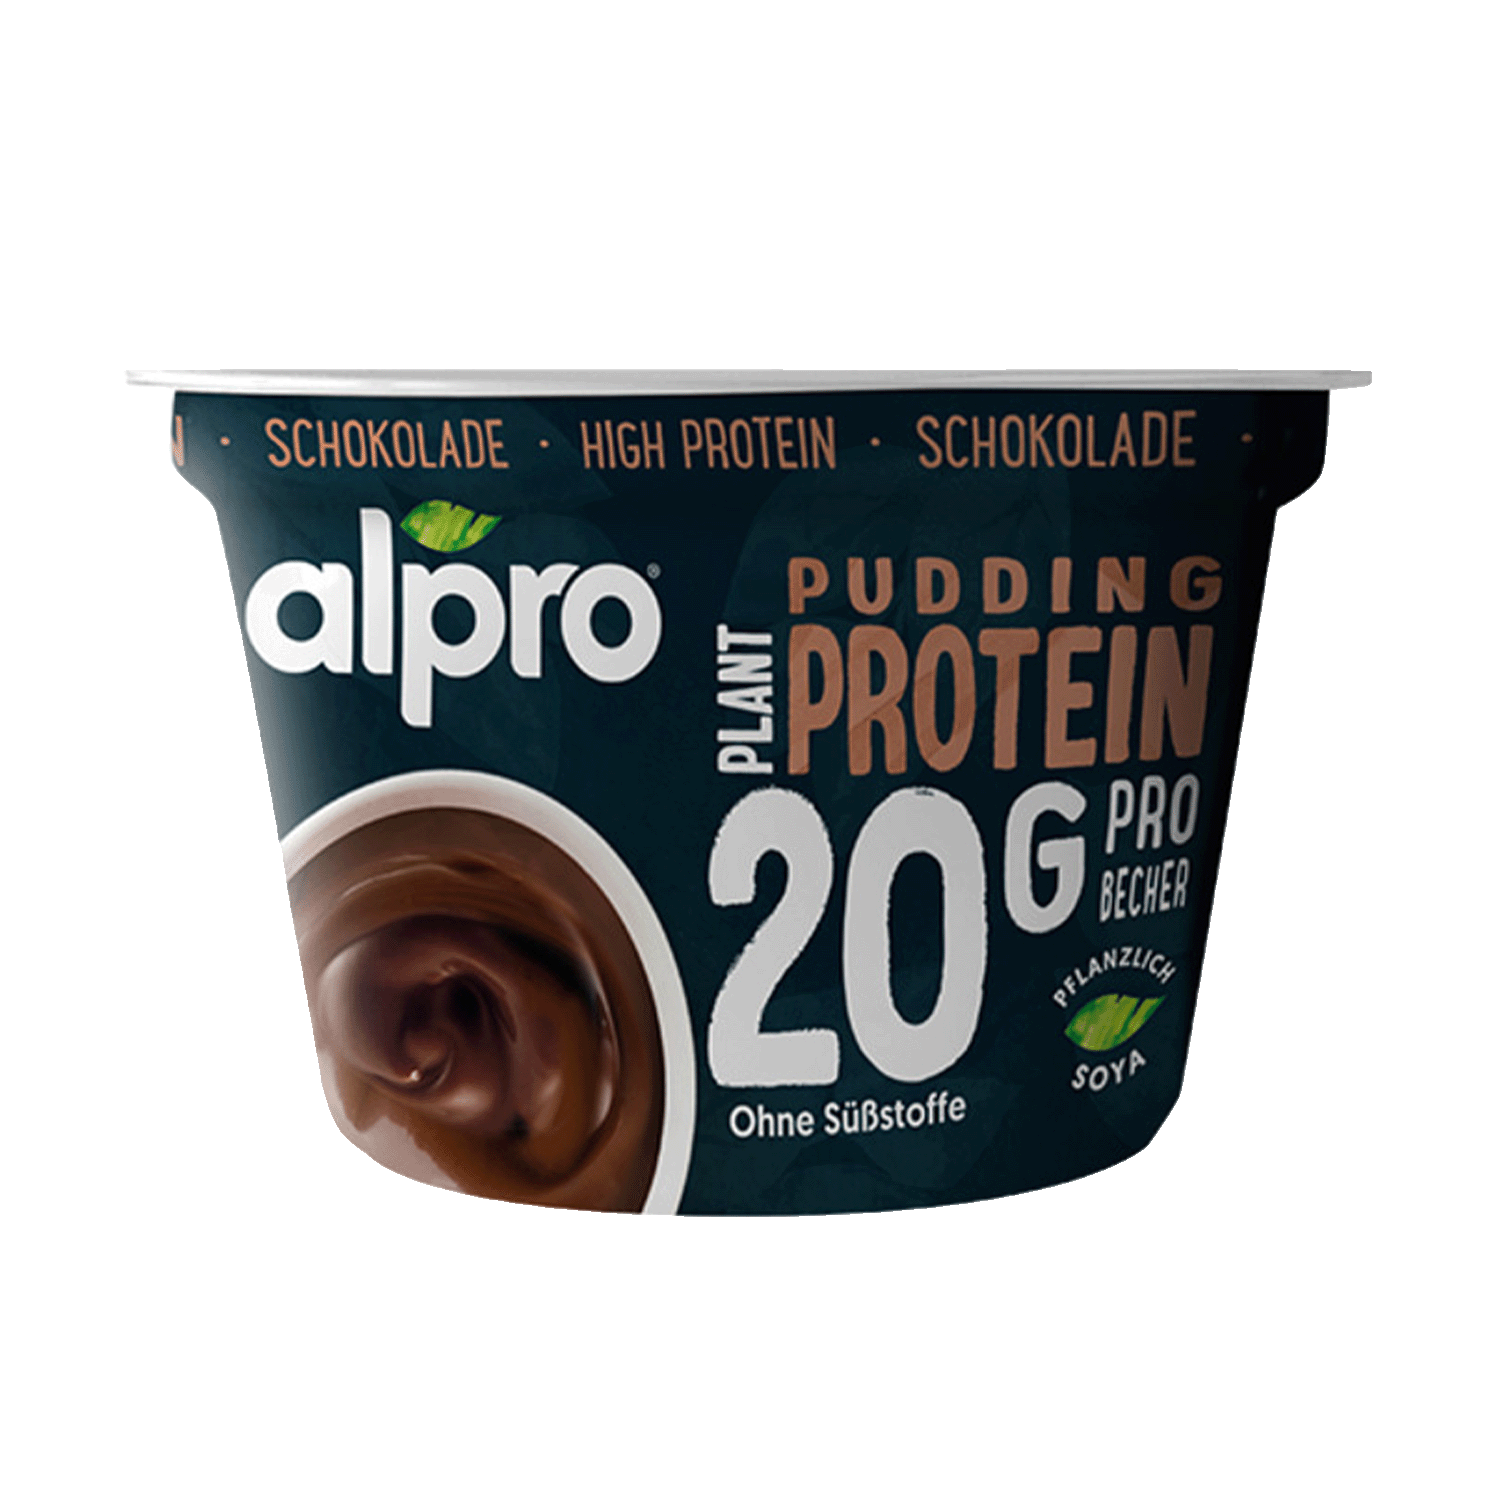 High Protein Pudding Schokolade, 200g